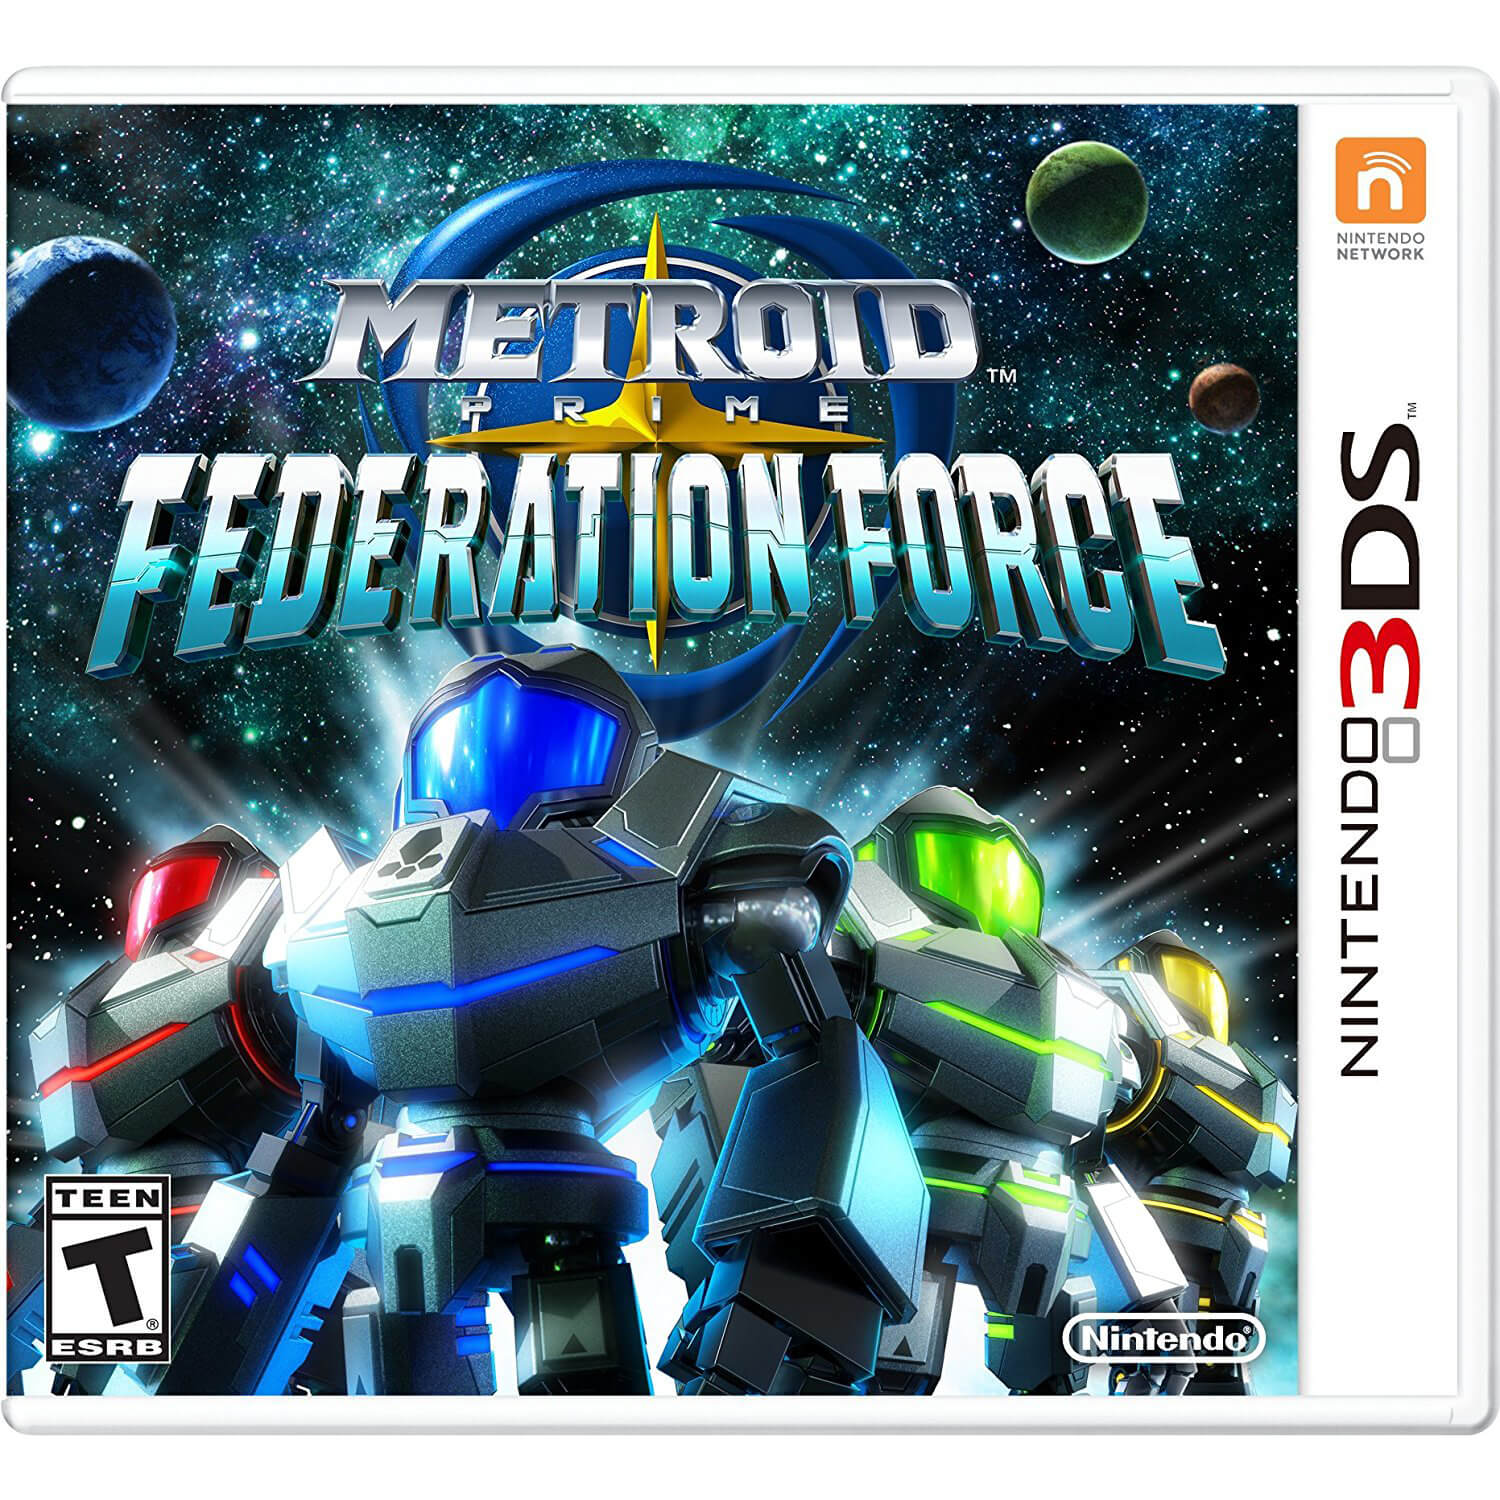  Joc Nintendo 3DS Metroid Prime Federation Force 